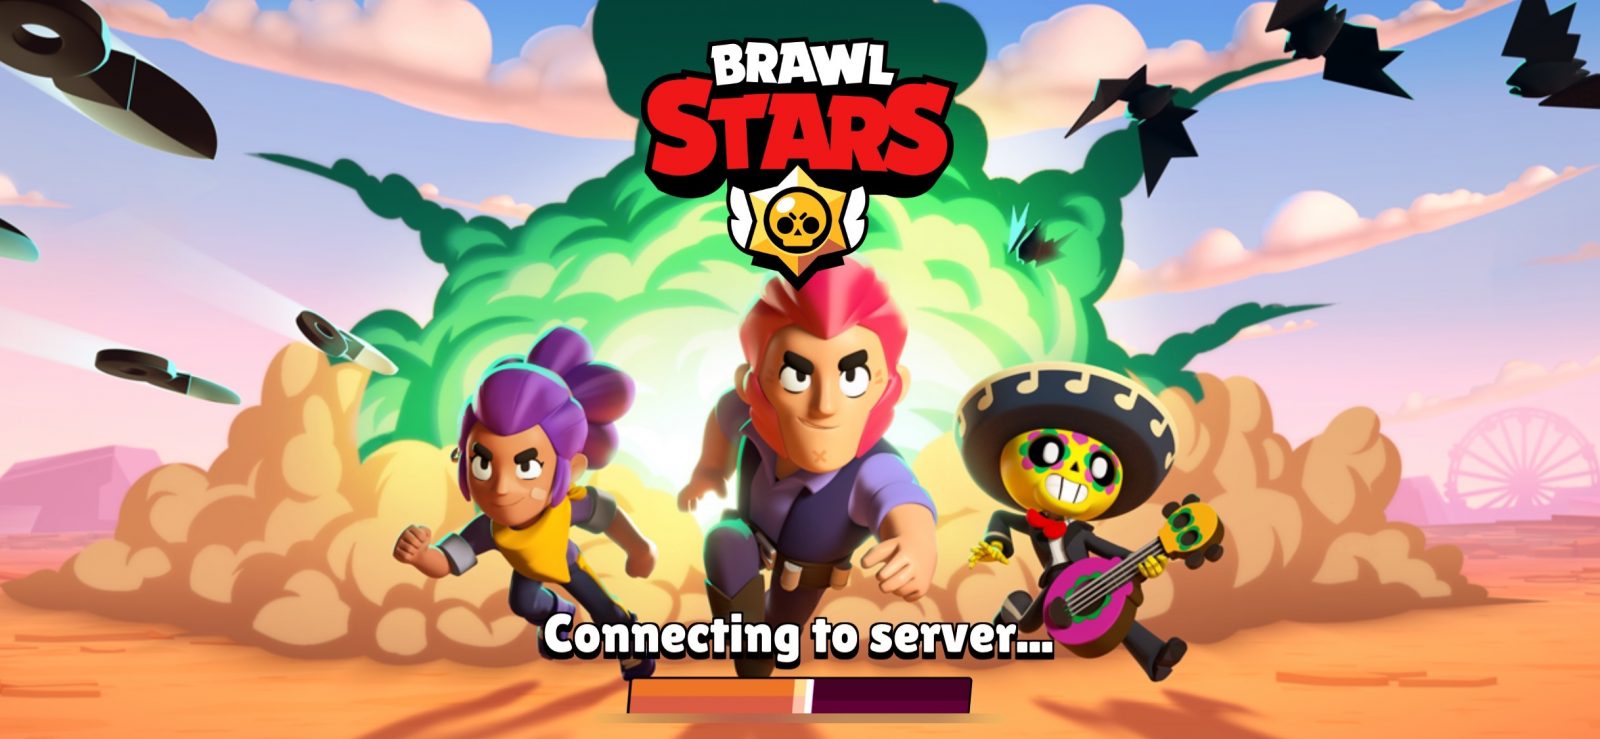 Brawl Stars The Casual App Gamer - 170 gems pack brawl stars